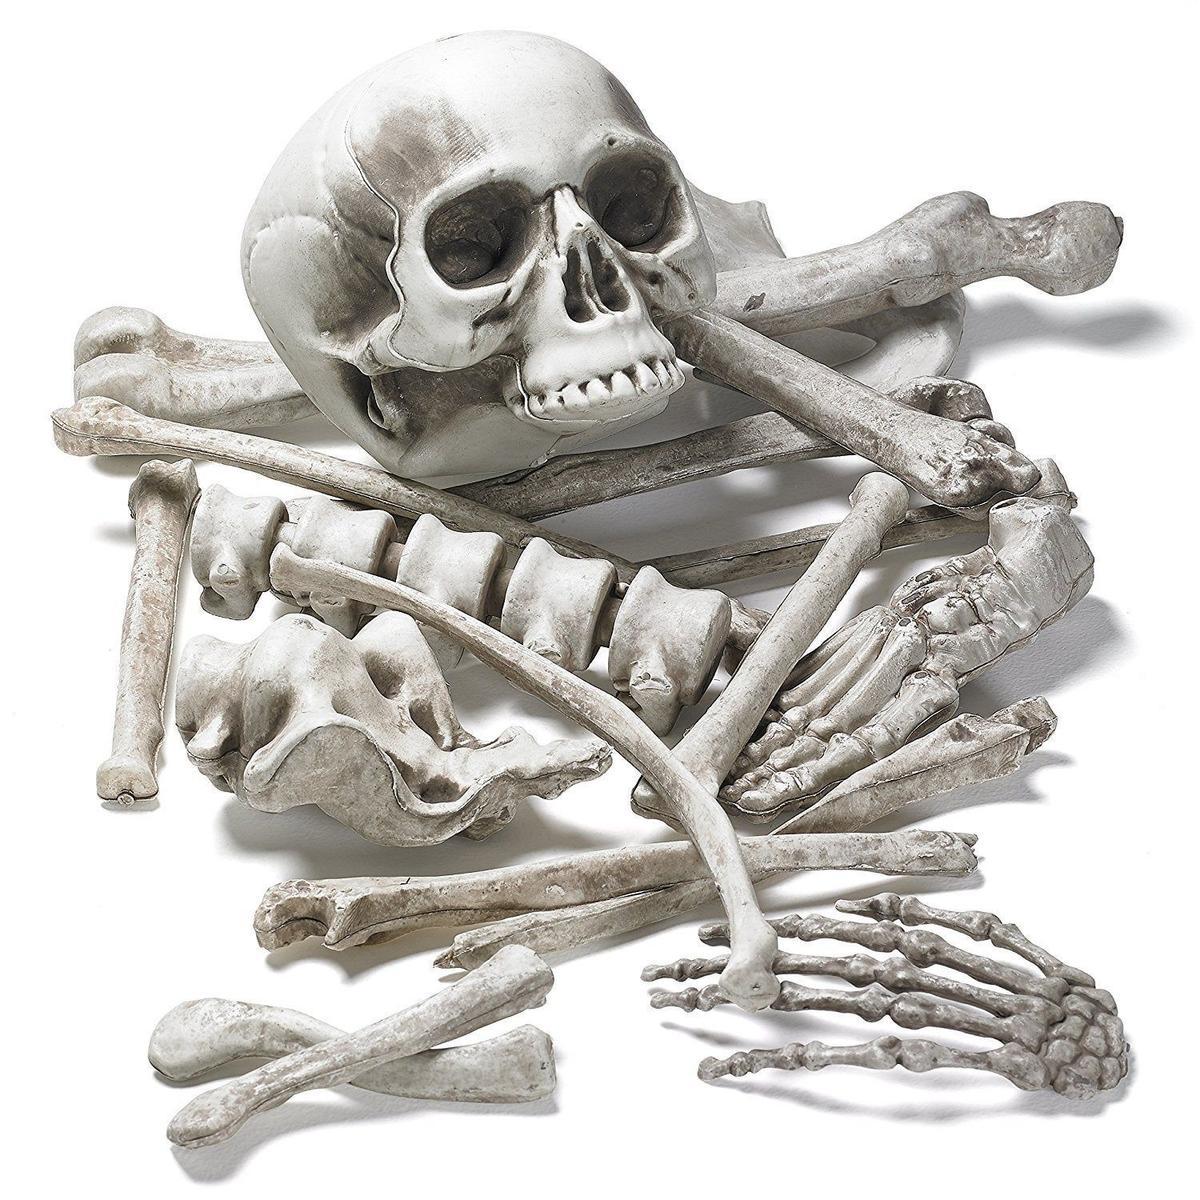 Esqueleto de 18 piezas para decorar (Precio: 22,99 euros)